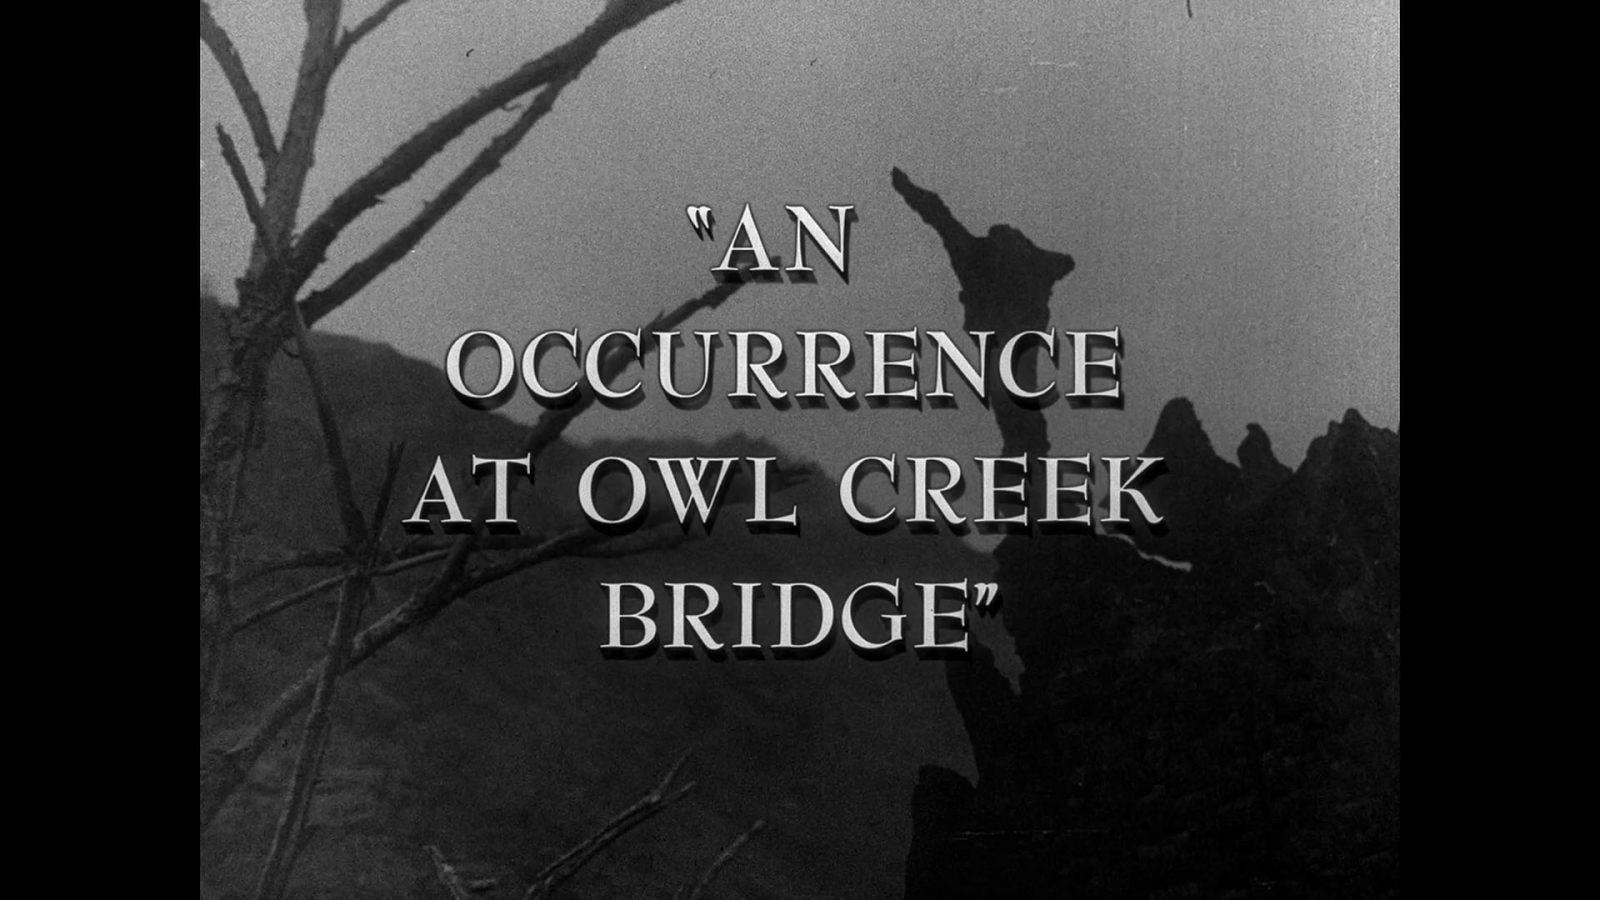 Bridge creek essay occurrence owl